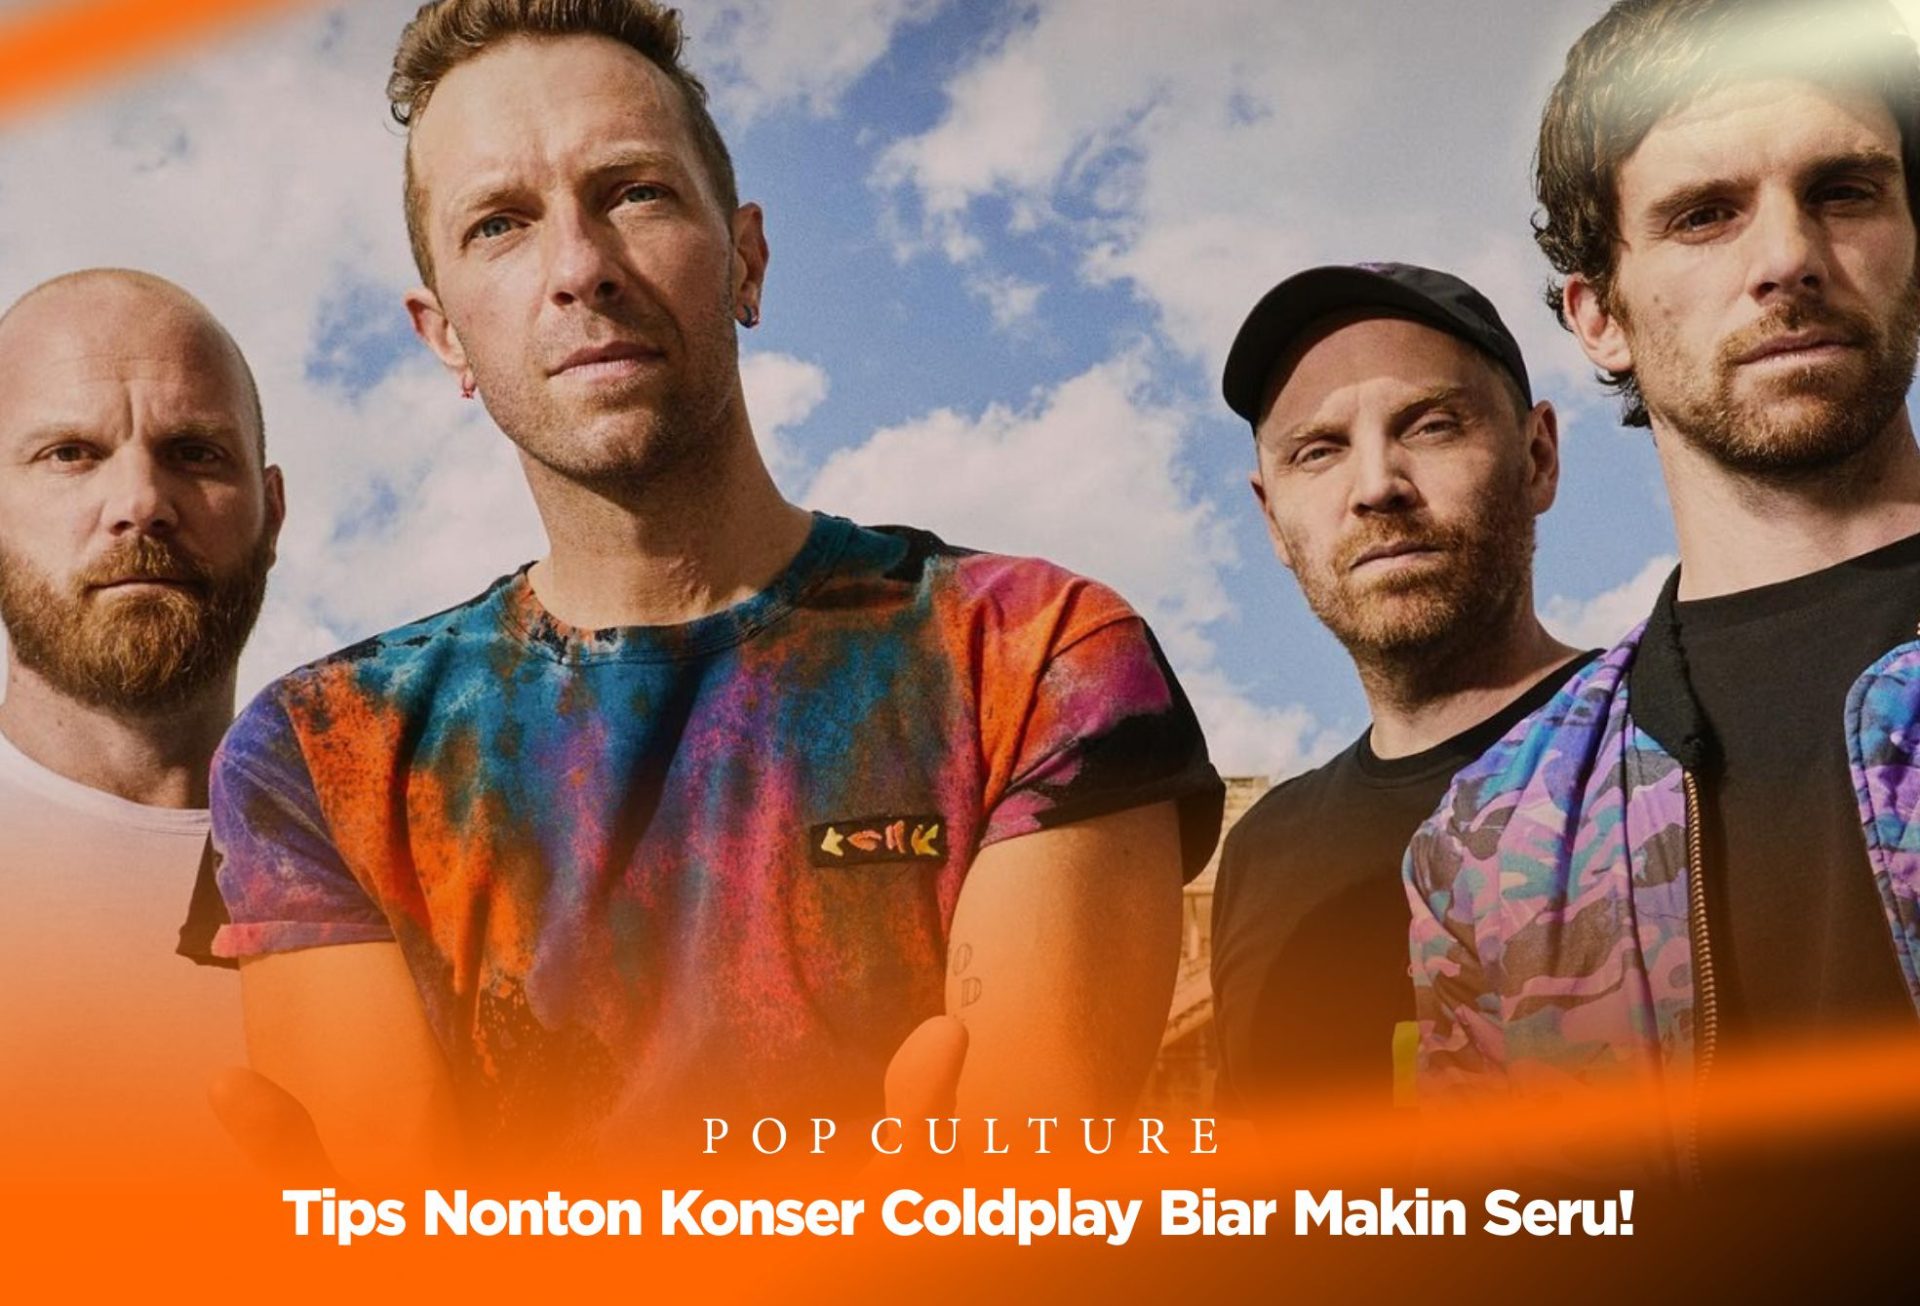 Tips Nonton Konser Coldplay Biar Makin Seru!